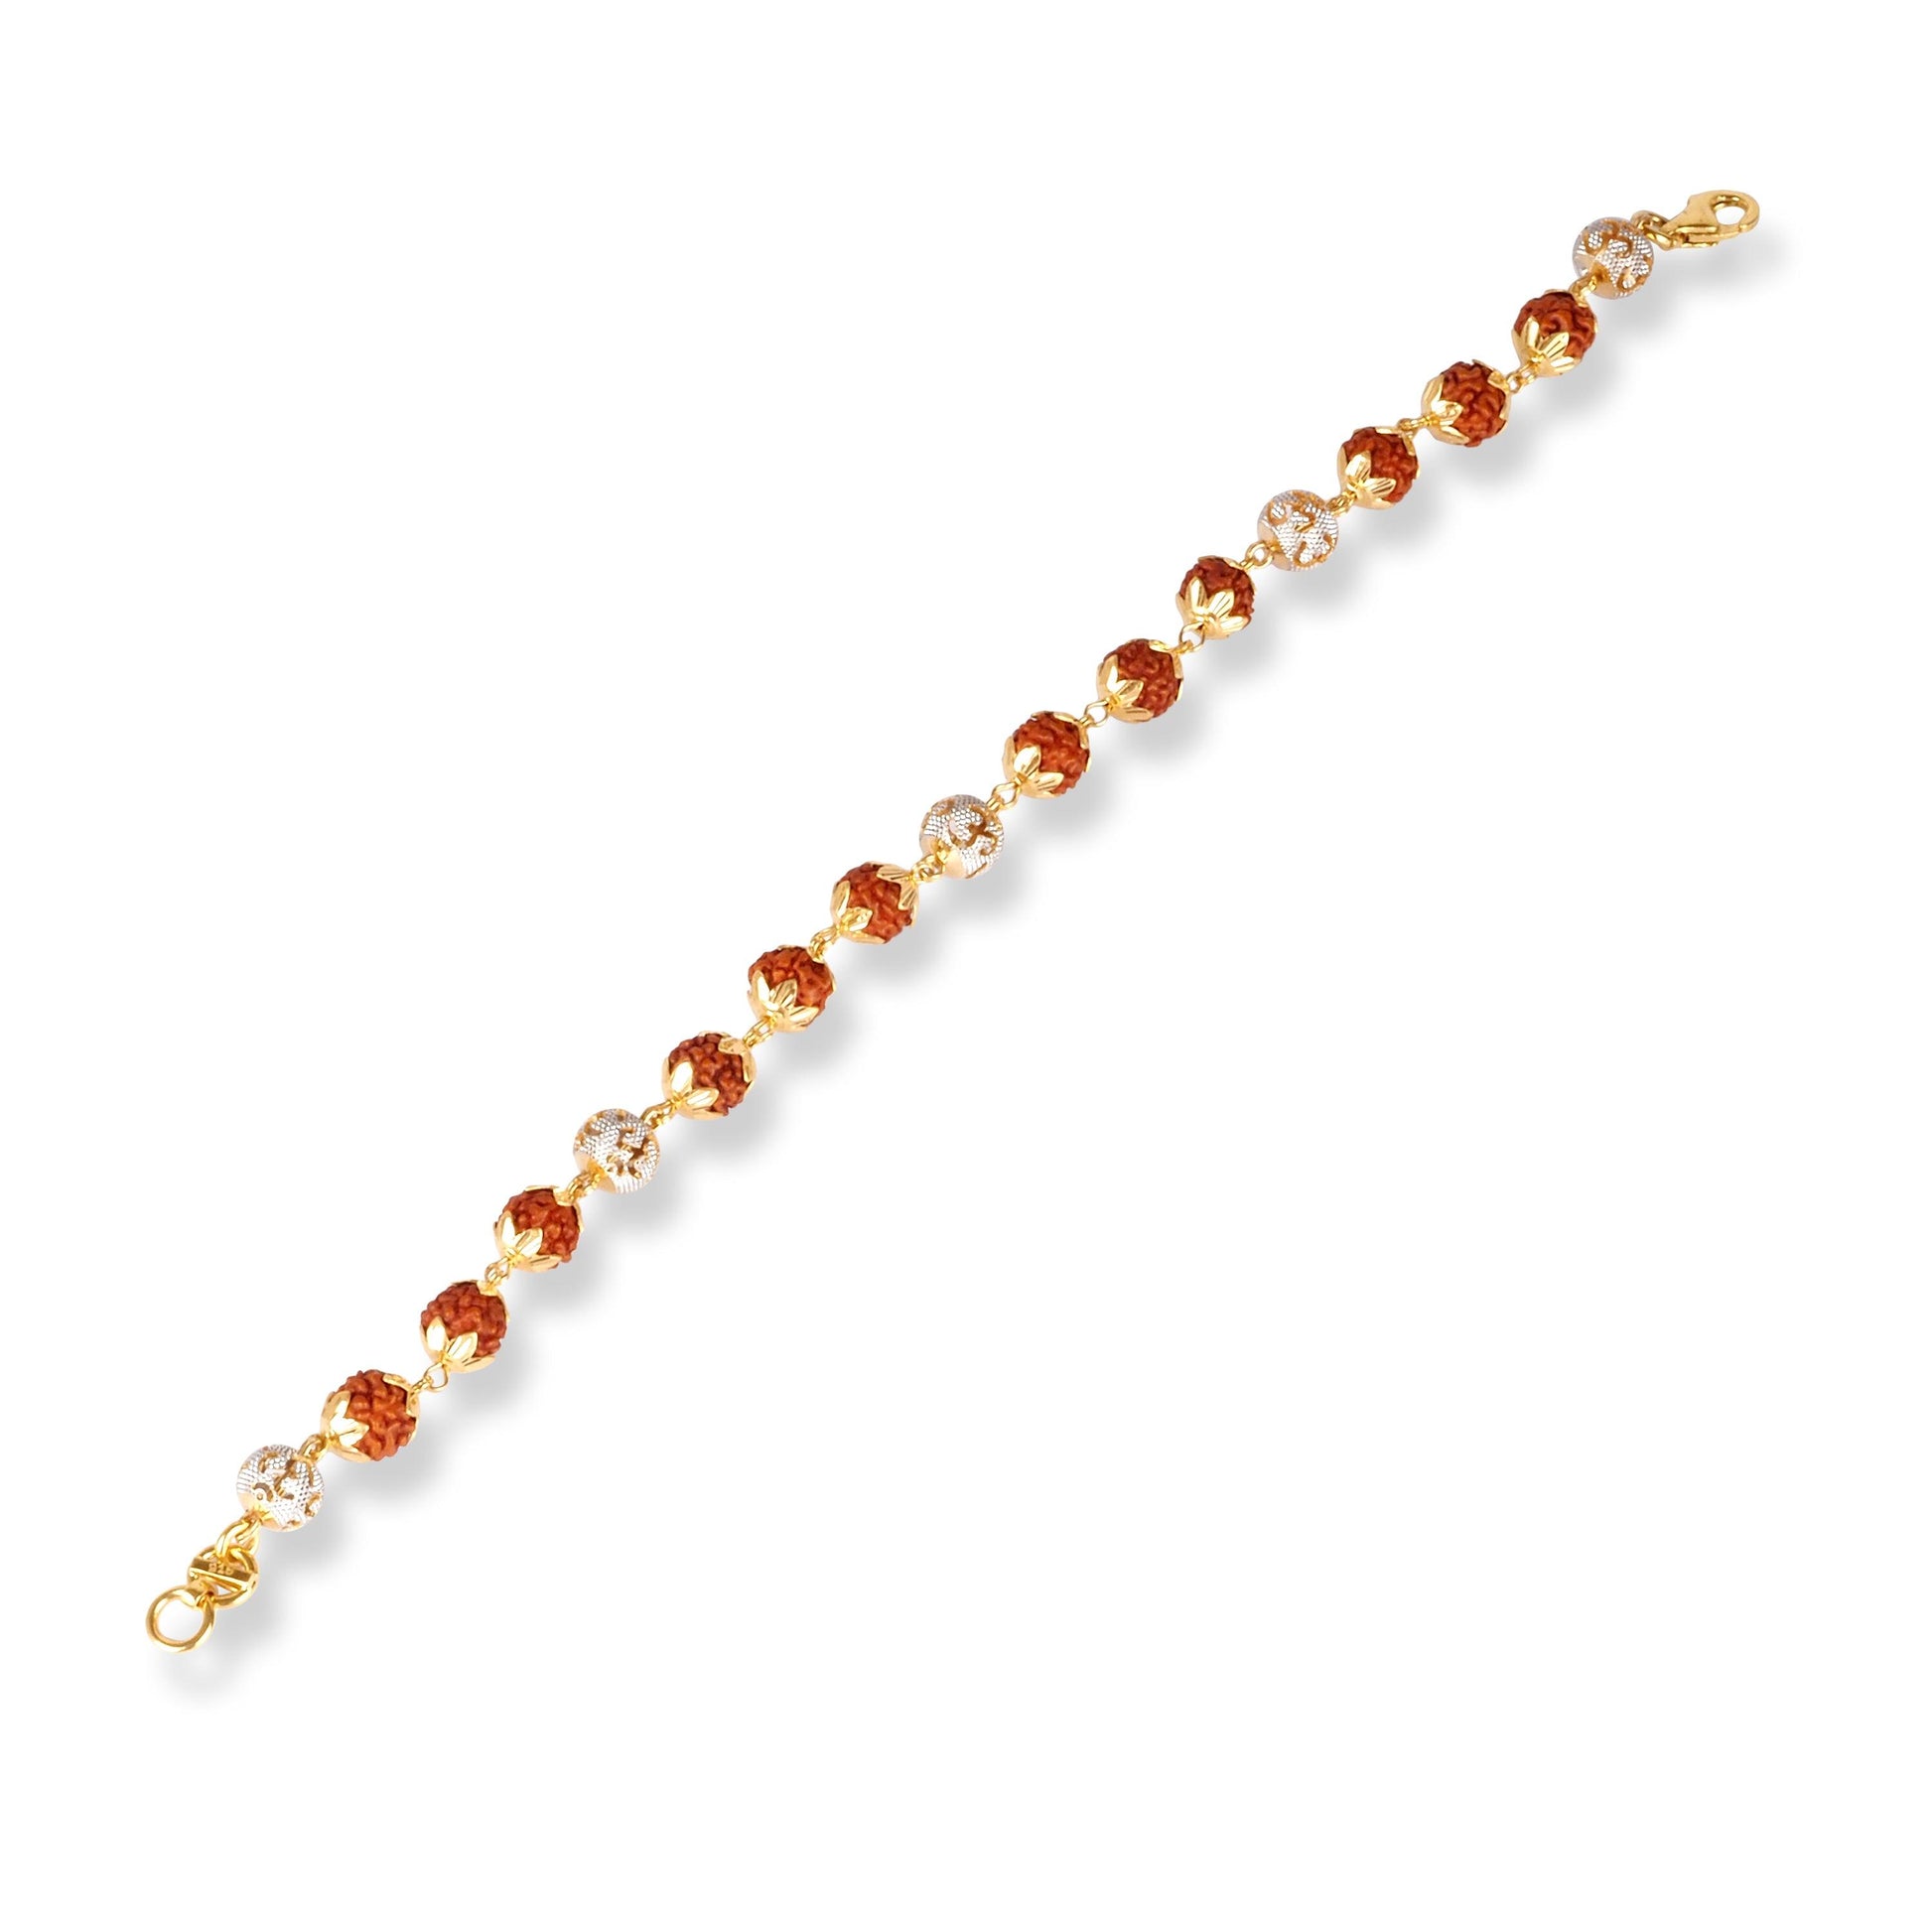 22ct Gold Rudraksh Bracelet with Diamond Cut Beads & Om Design GBR-8326 - Minar Jewellers